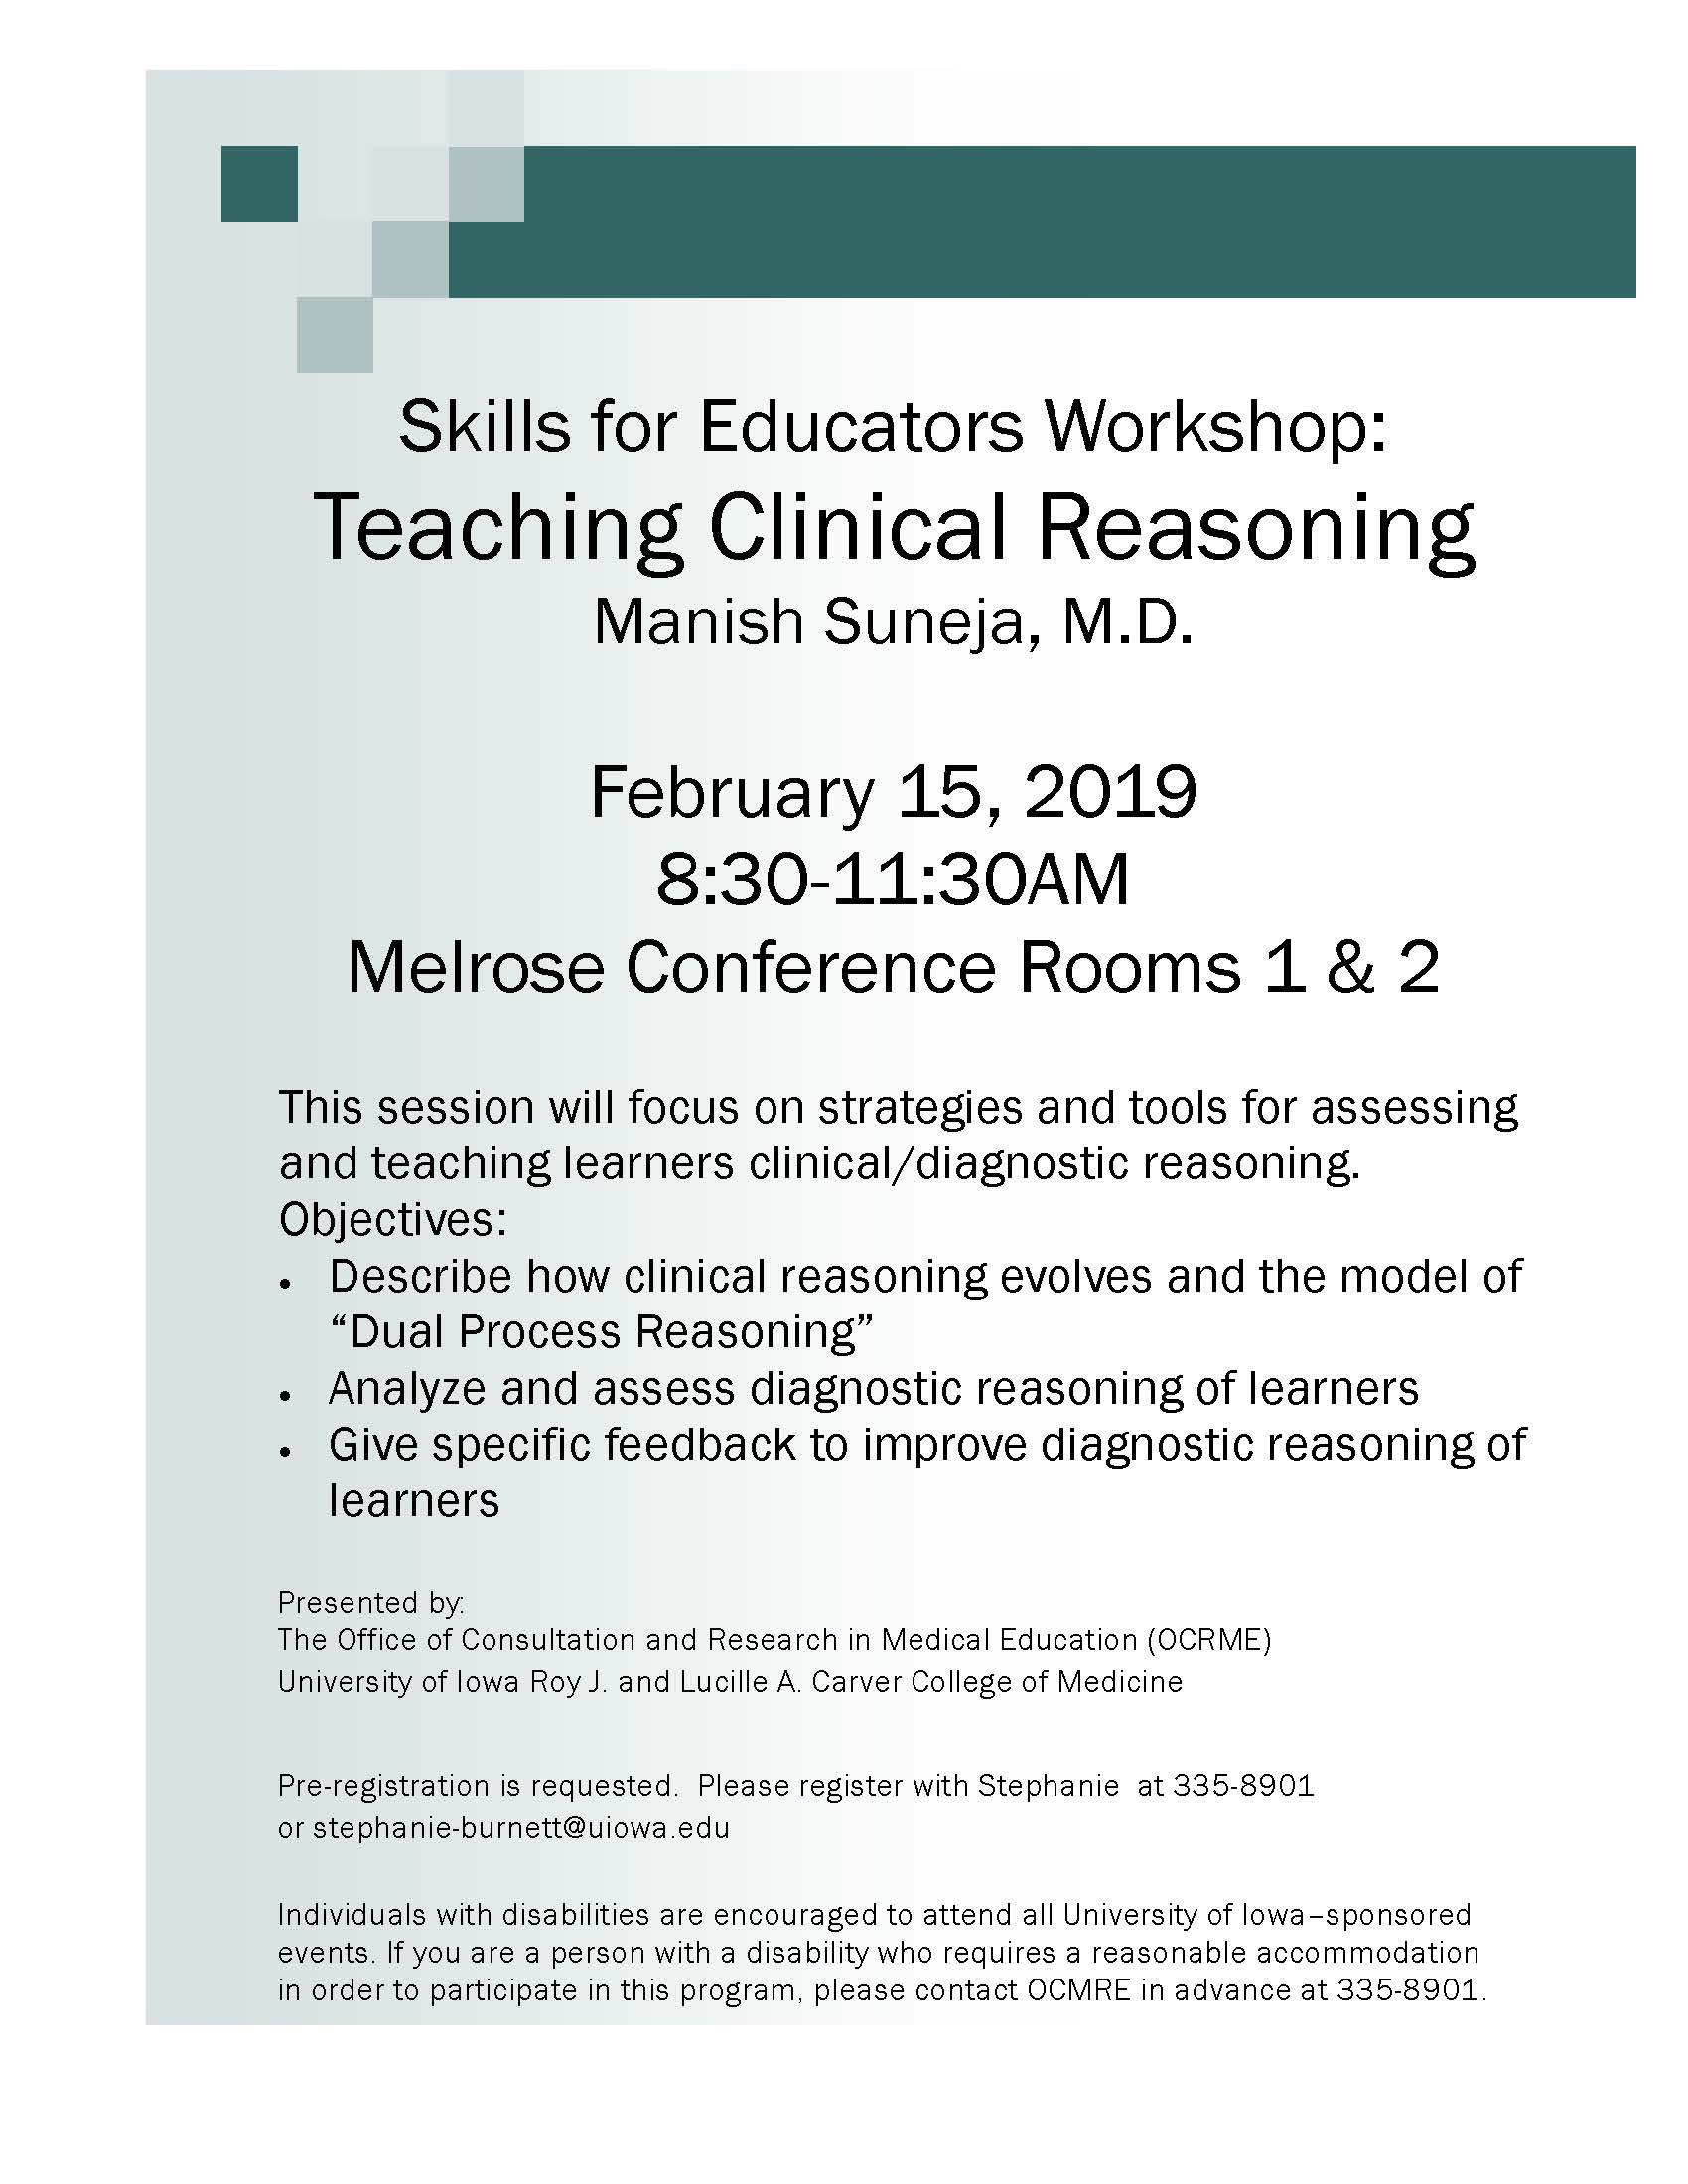 Skills for Educators Workshop: Teaching Clinical Reasoning promotional image